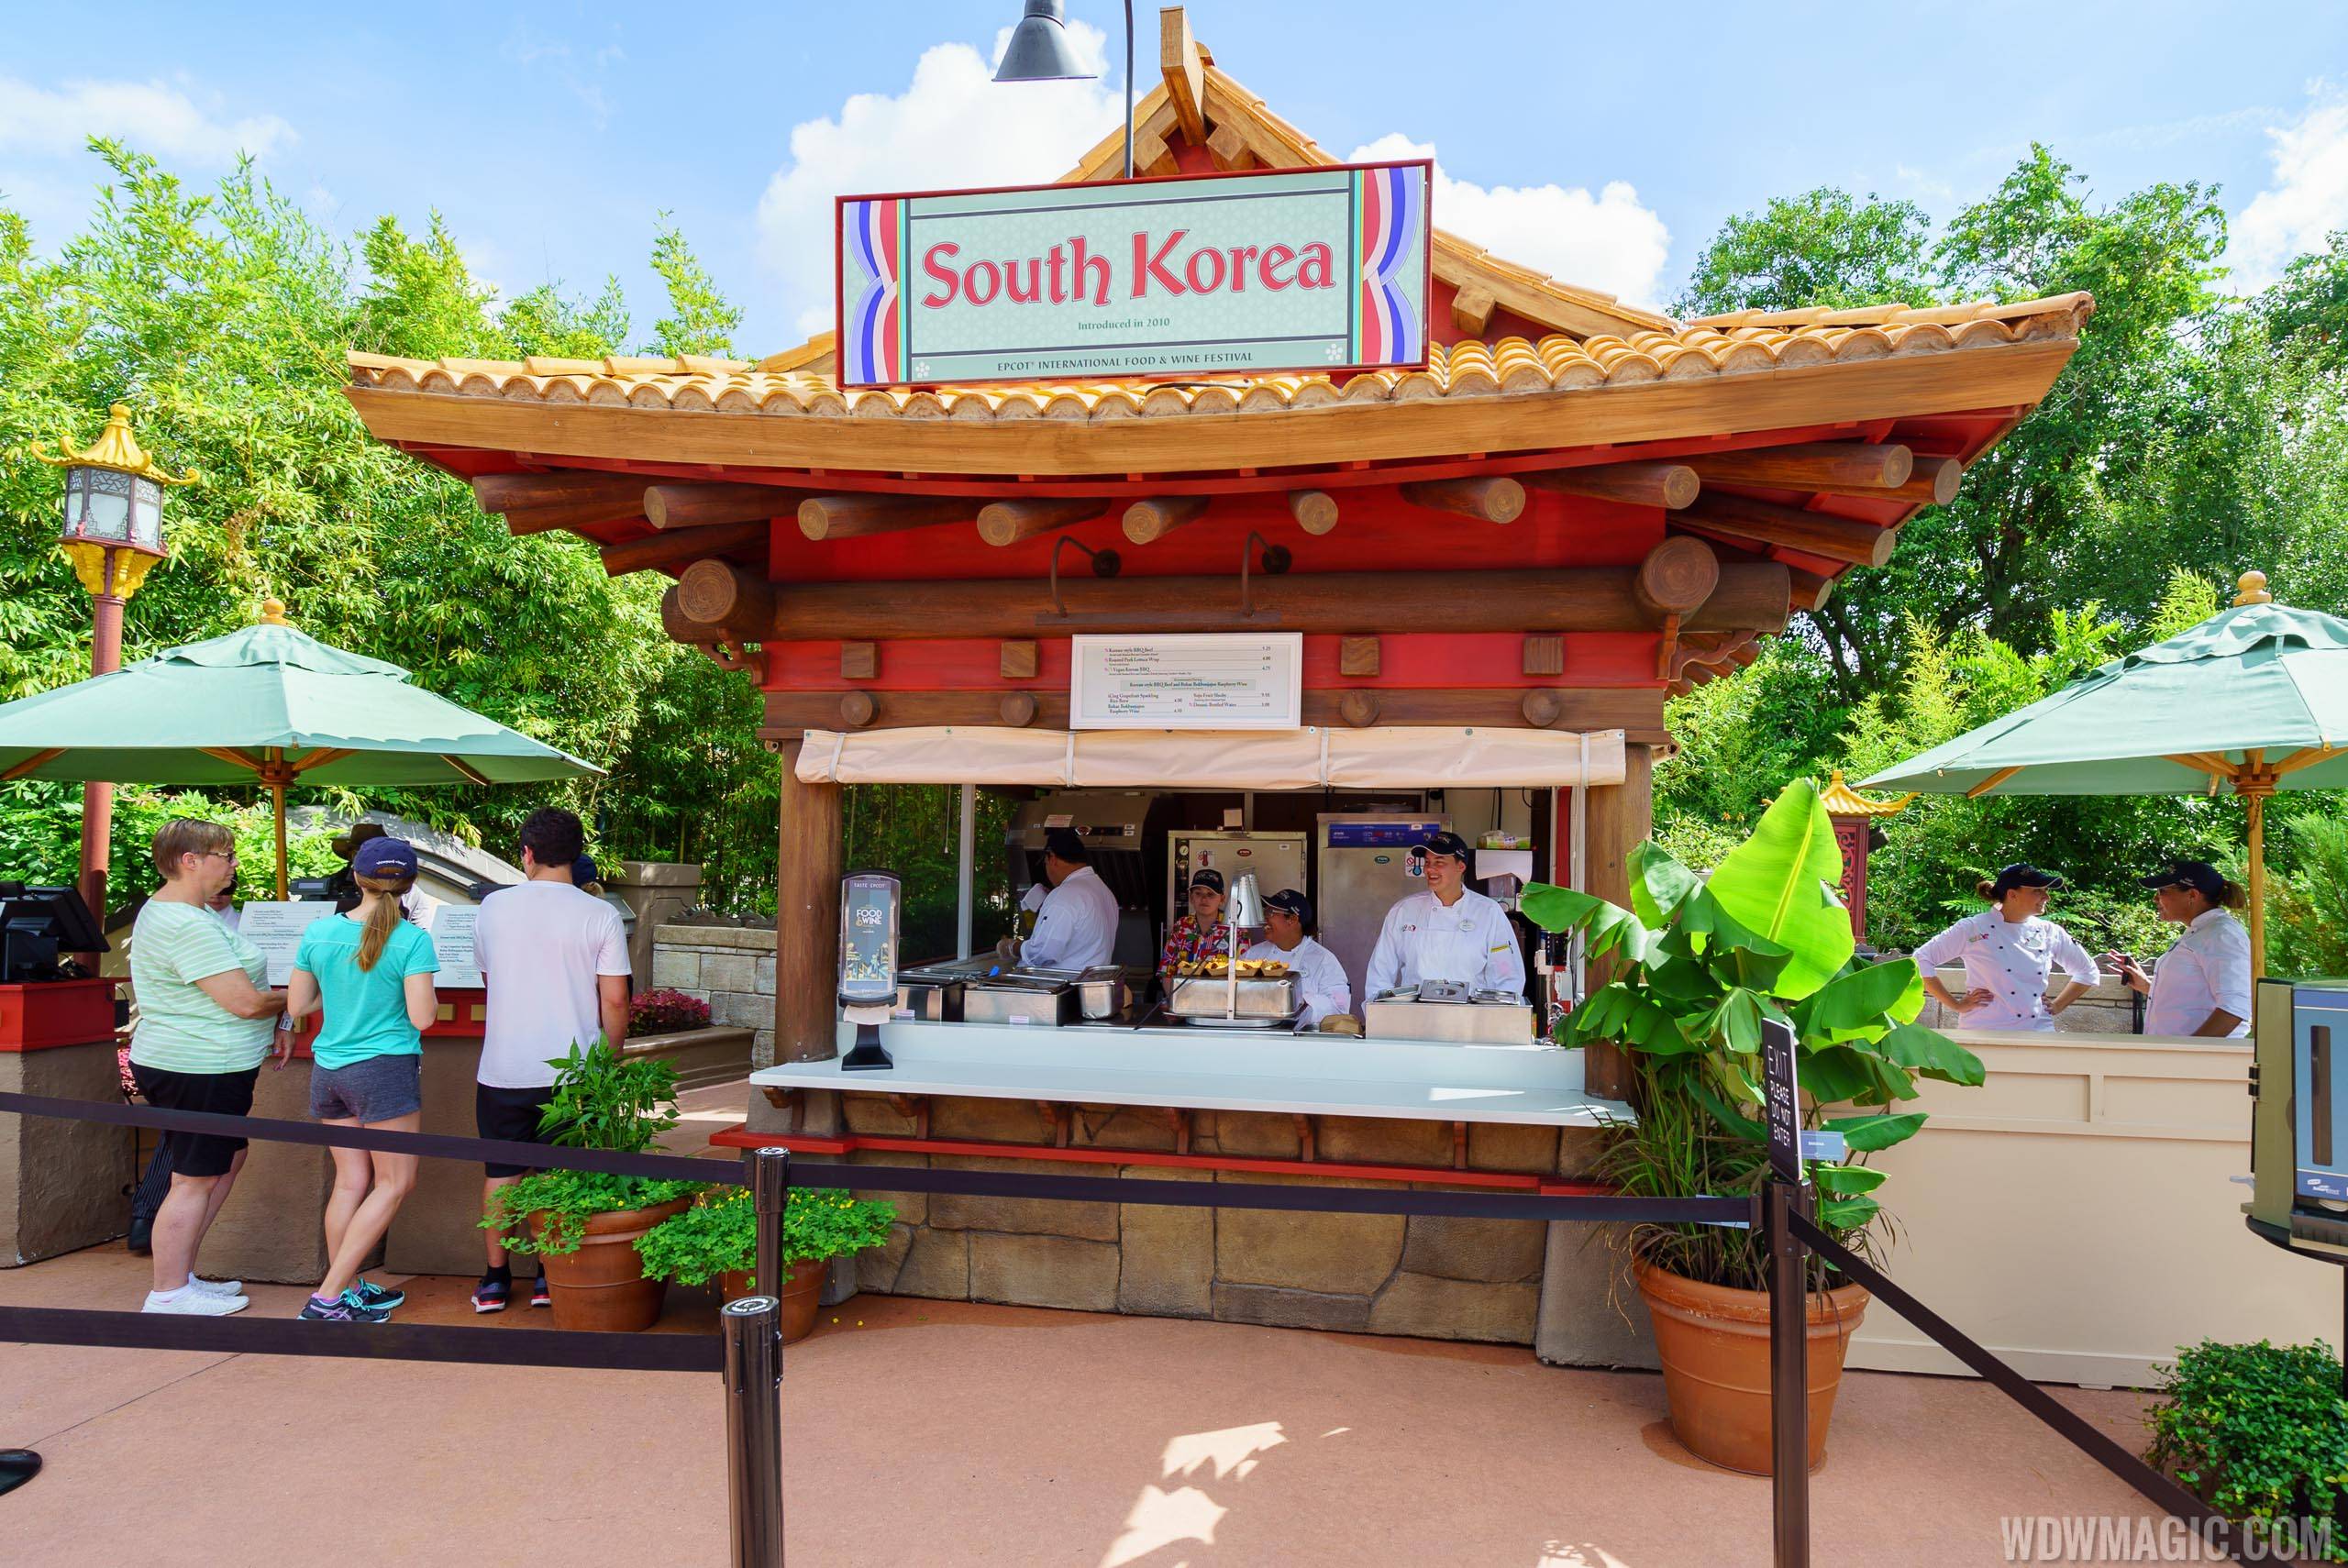 2016 Epcot Food and Wine Festival - South Korea kiosk